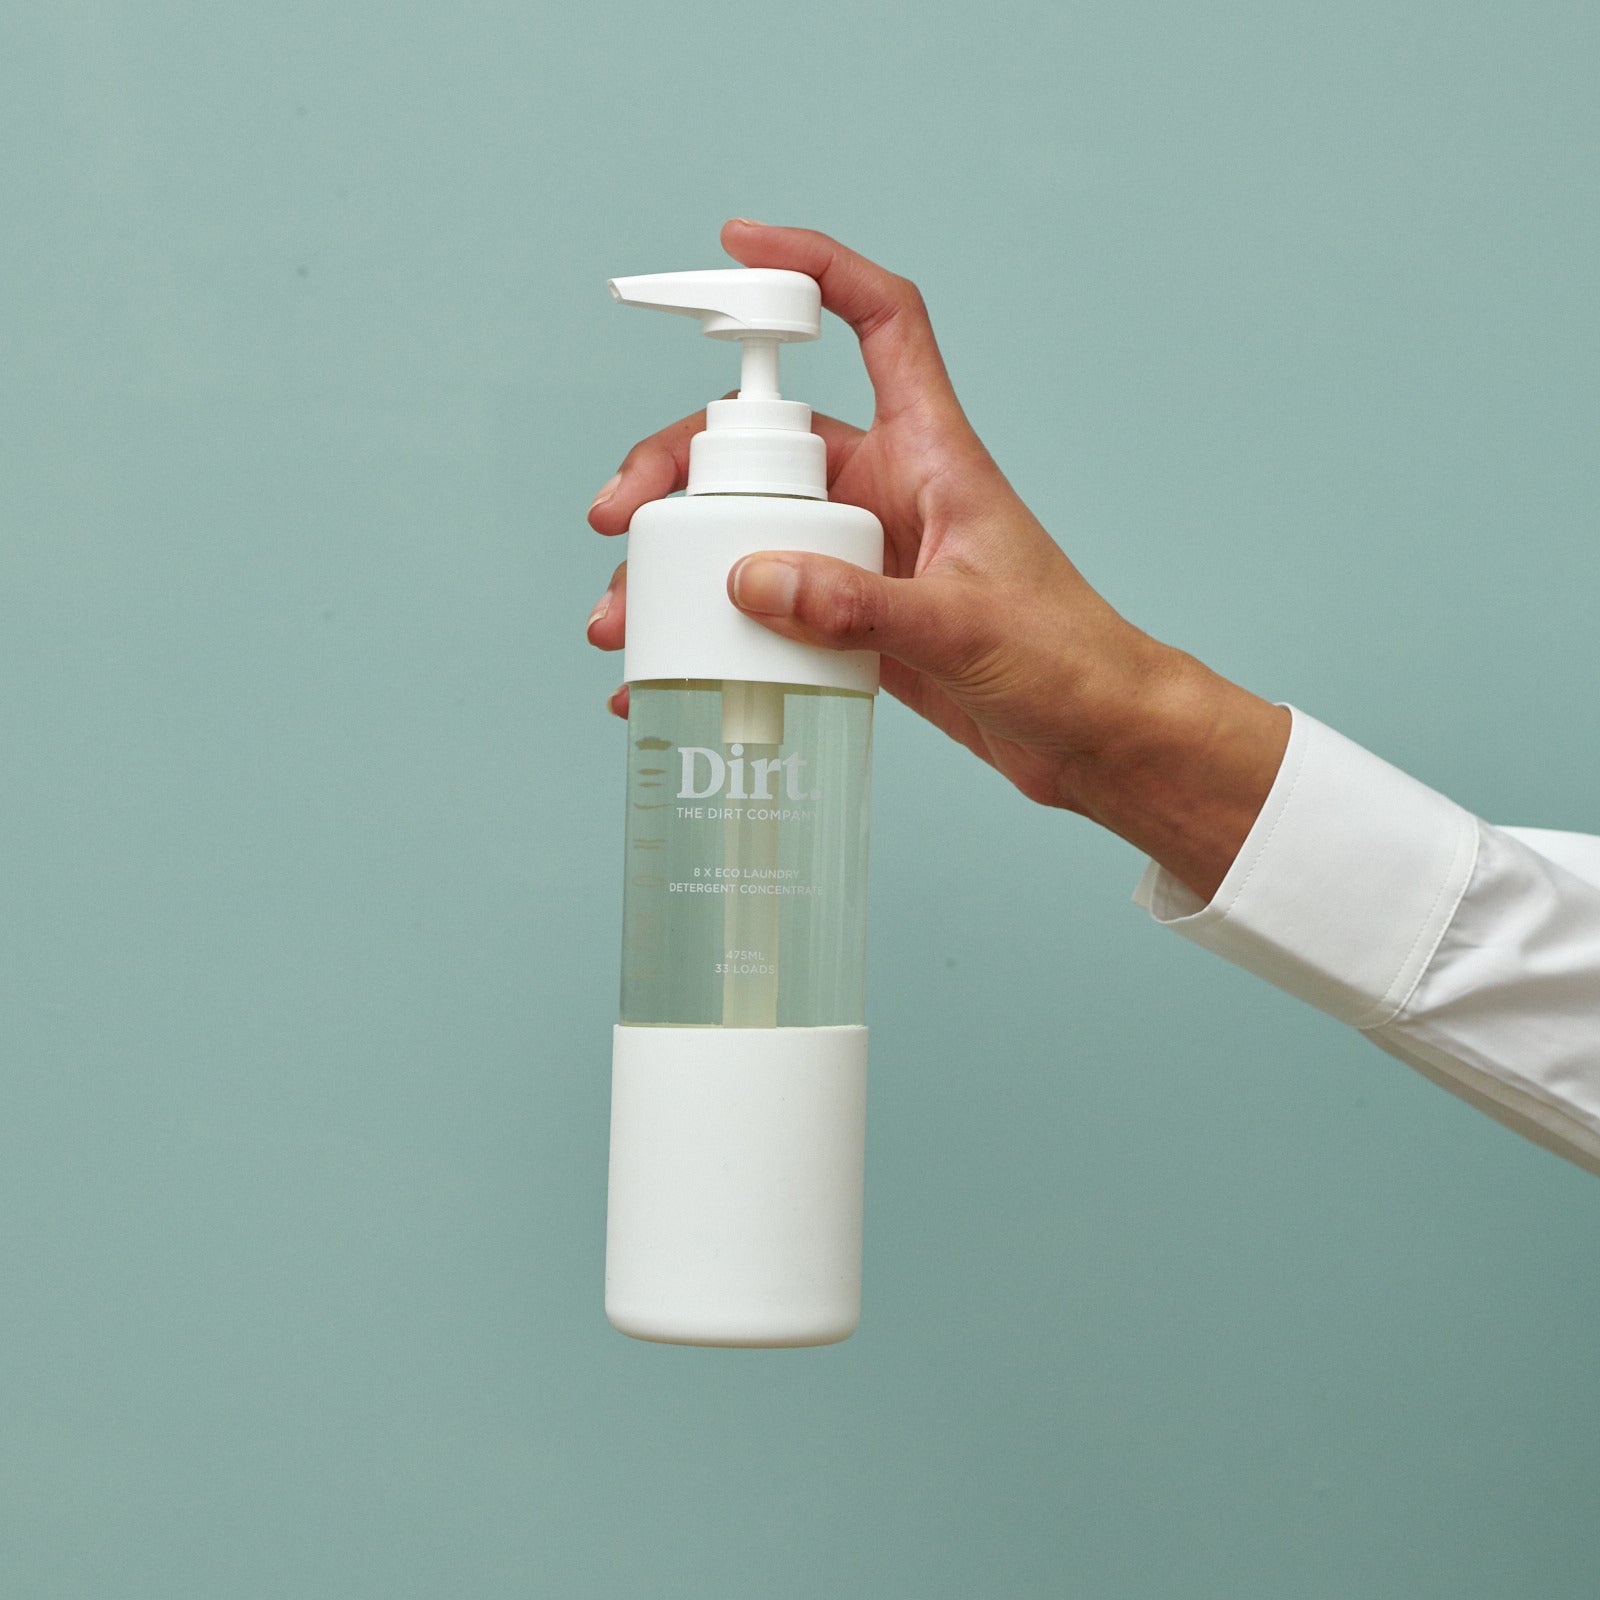 Dirt Laundry Detergent Bottle-The Living Co.